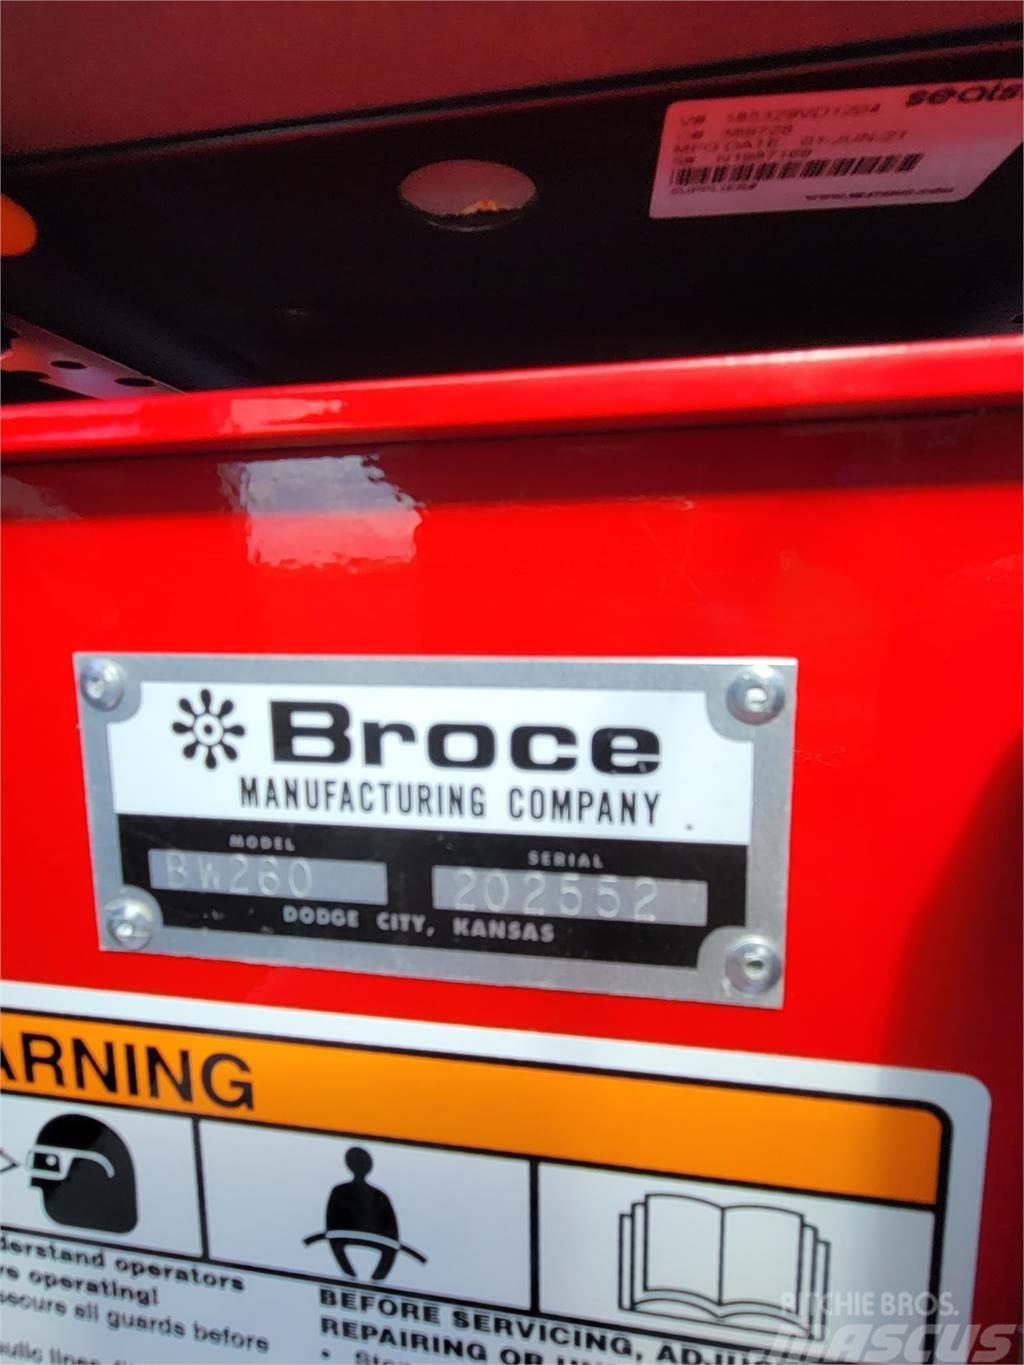 Broce BW260 Úttakarító gépek